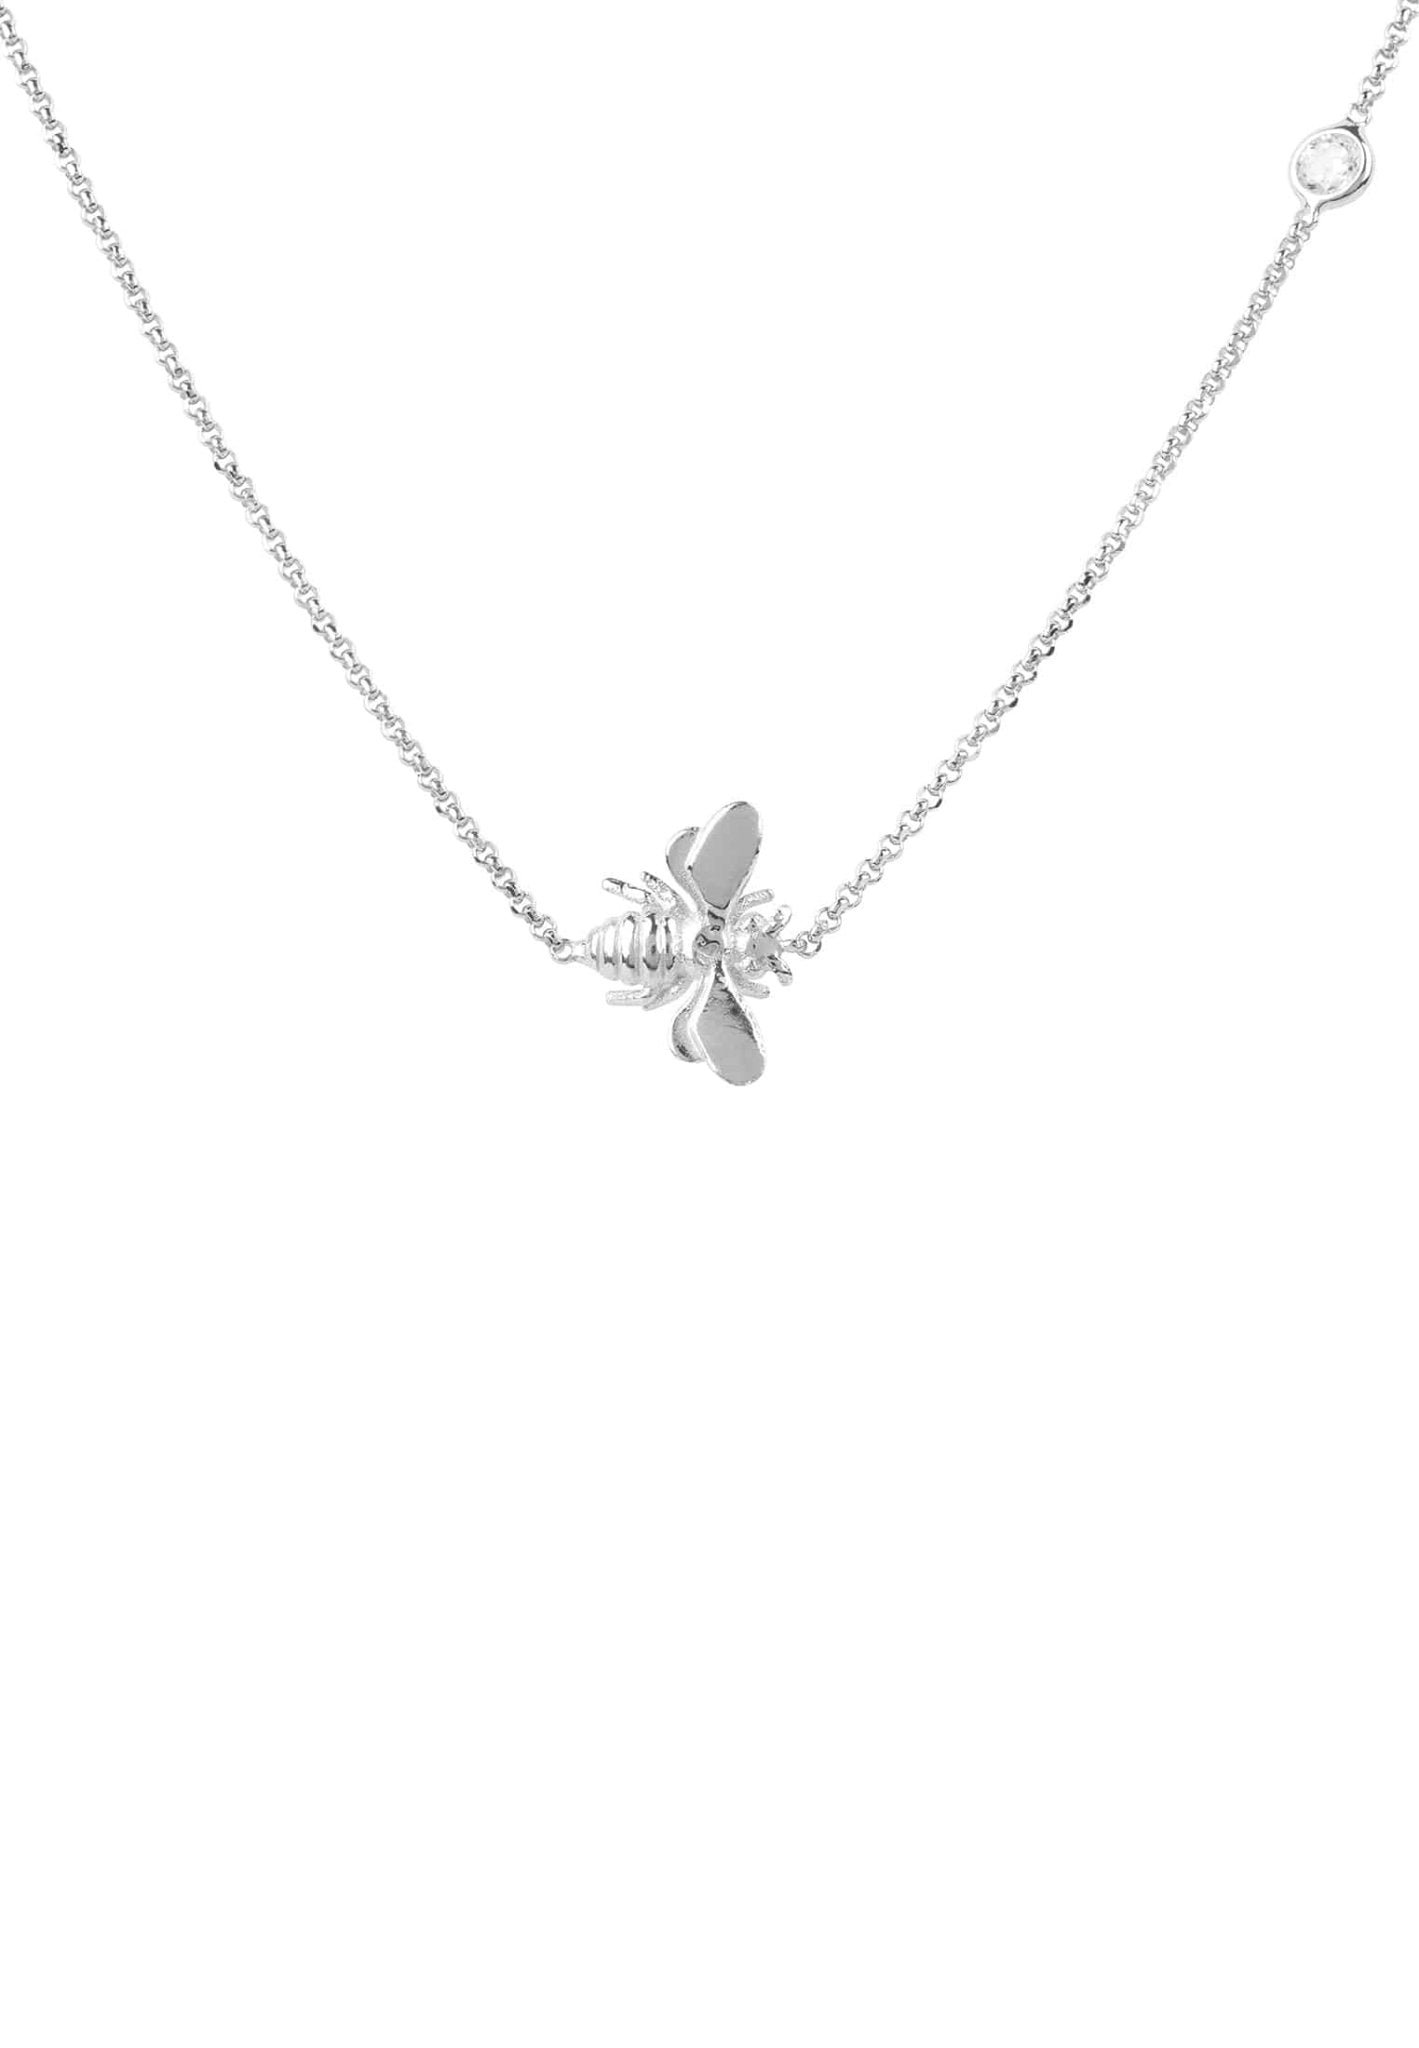 Queen Bee Necklace Silver - LATELITA Necklaces